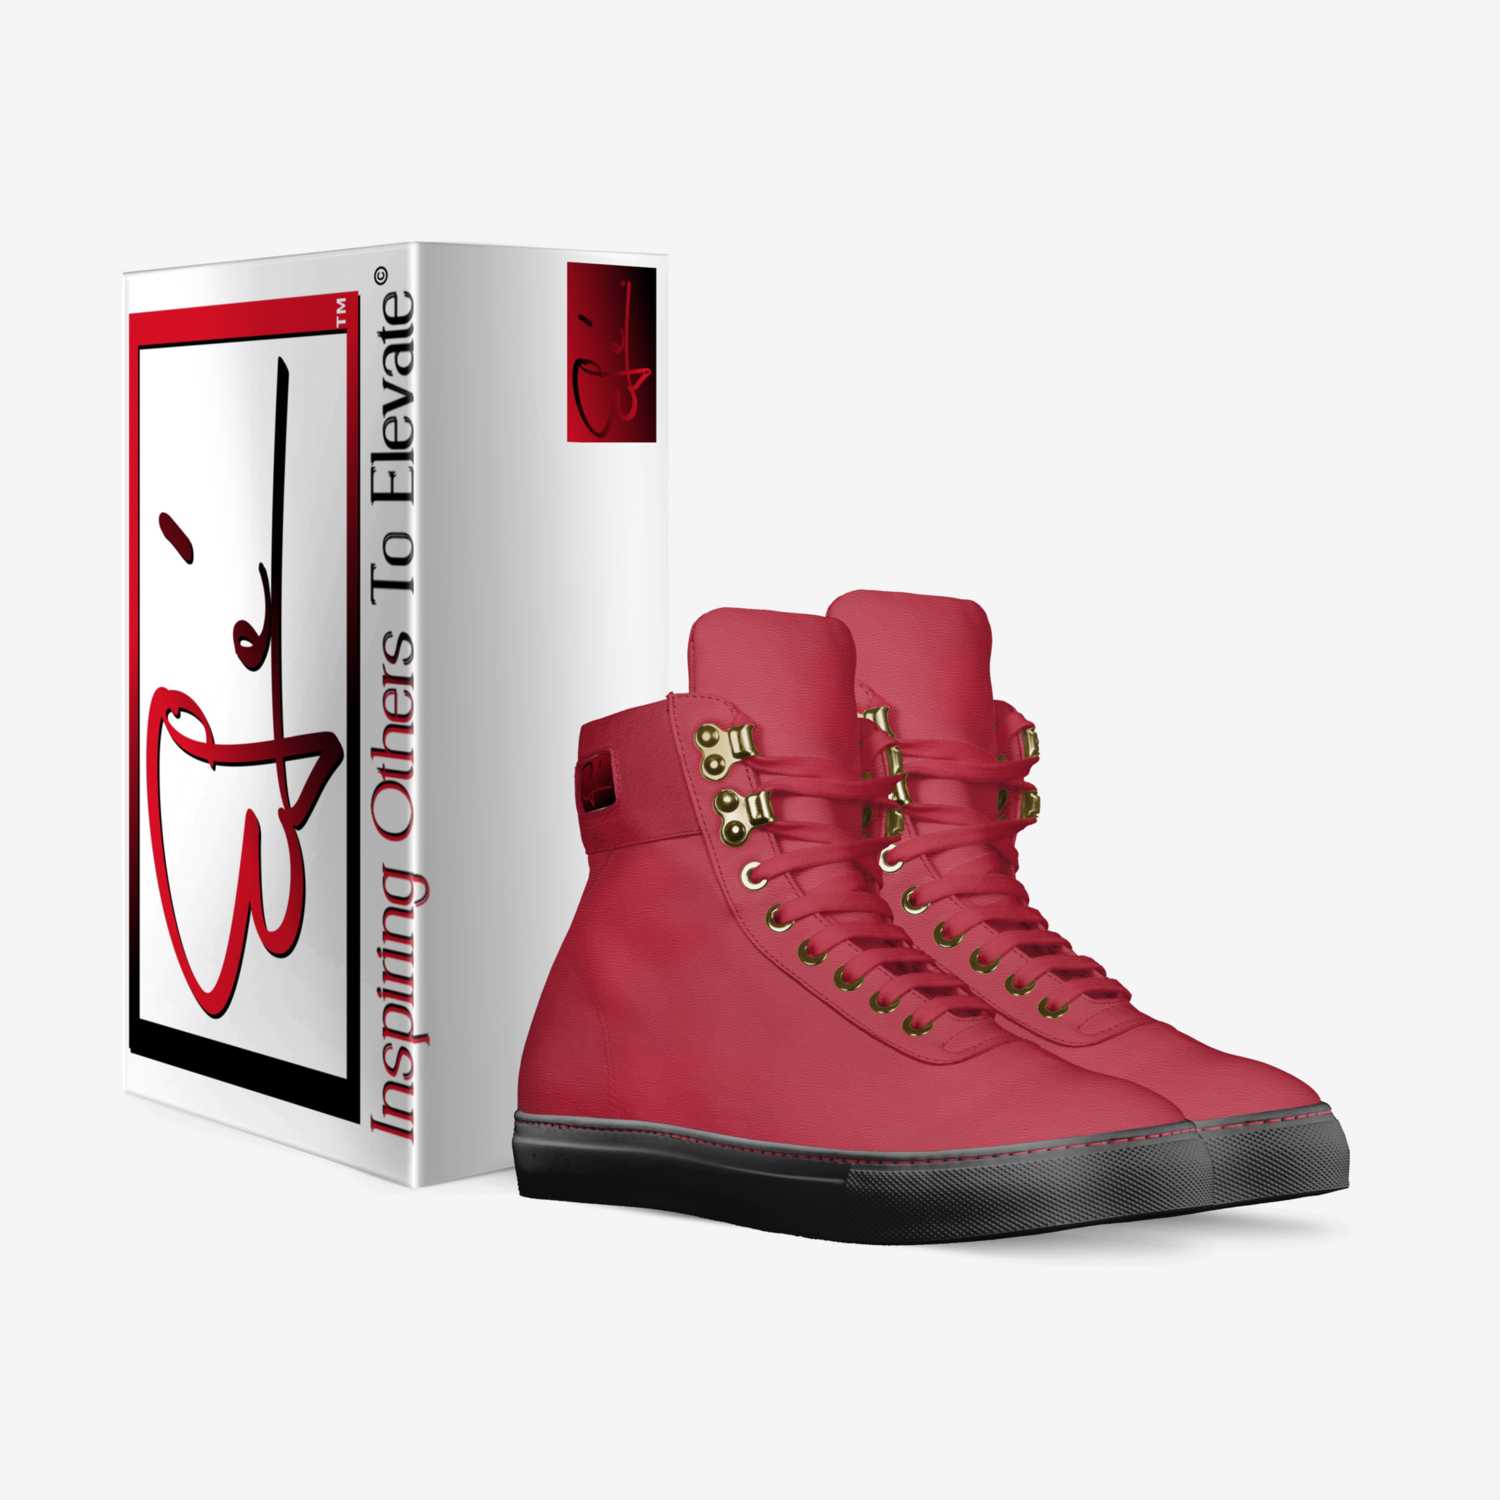 ELe' Redd Rumm custom made in Italy shoes by Antonio James | Box view